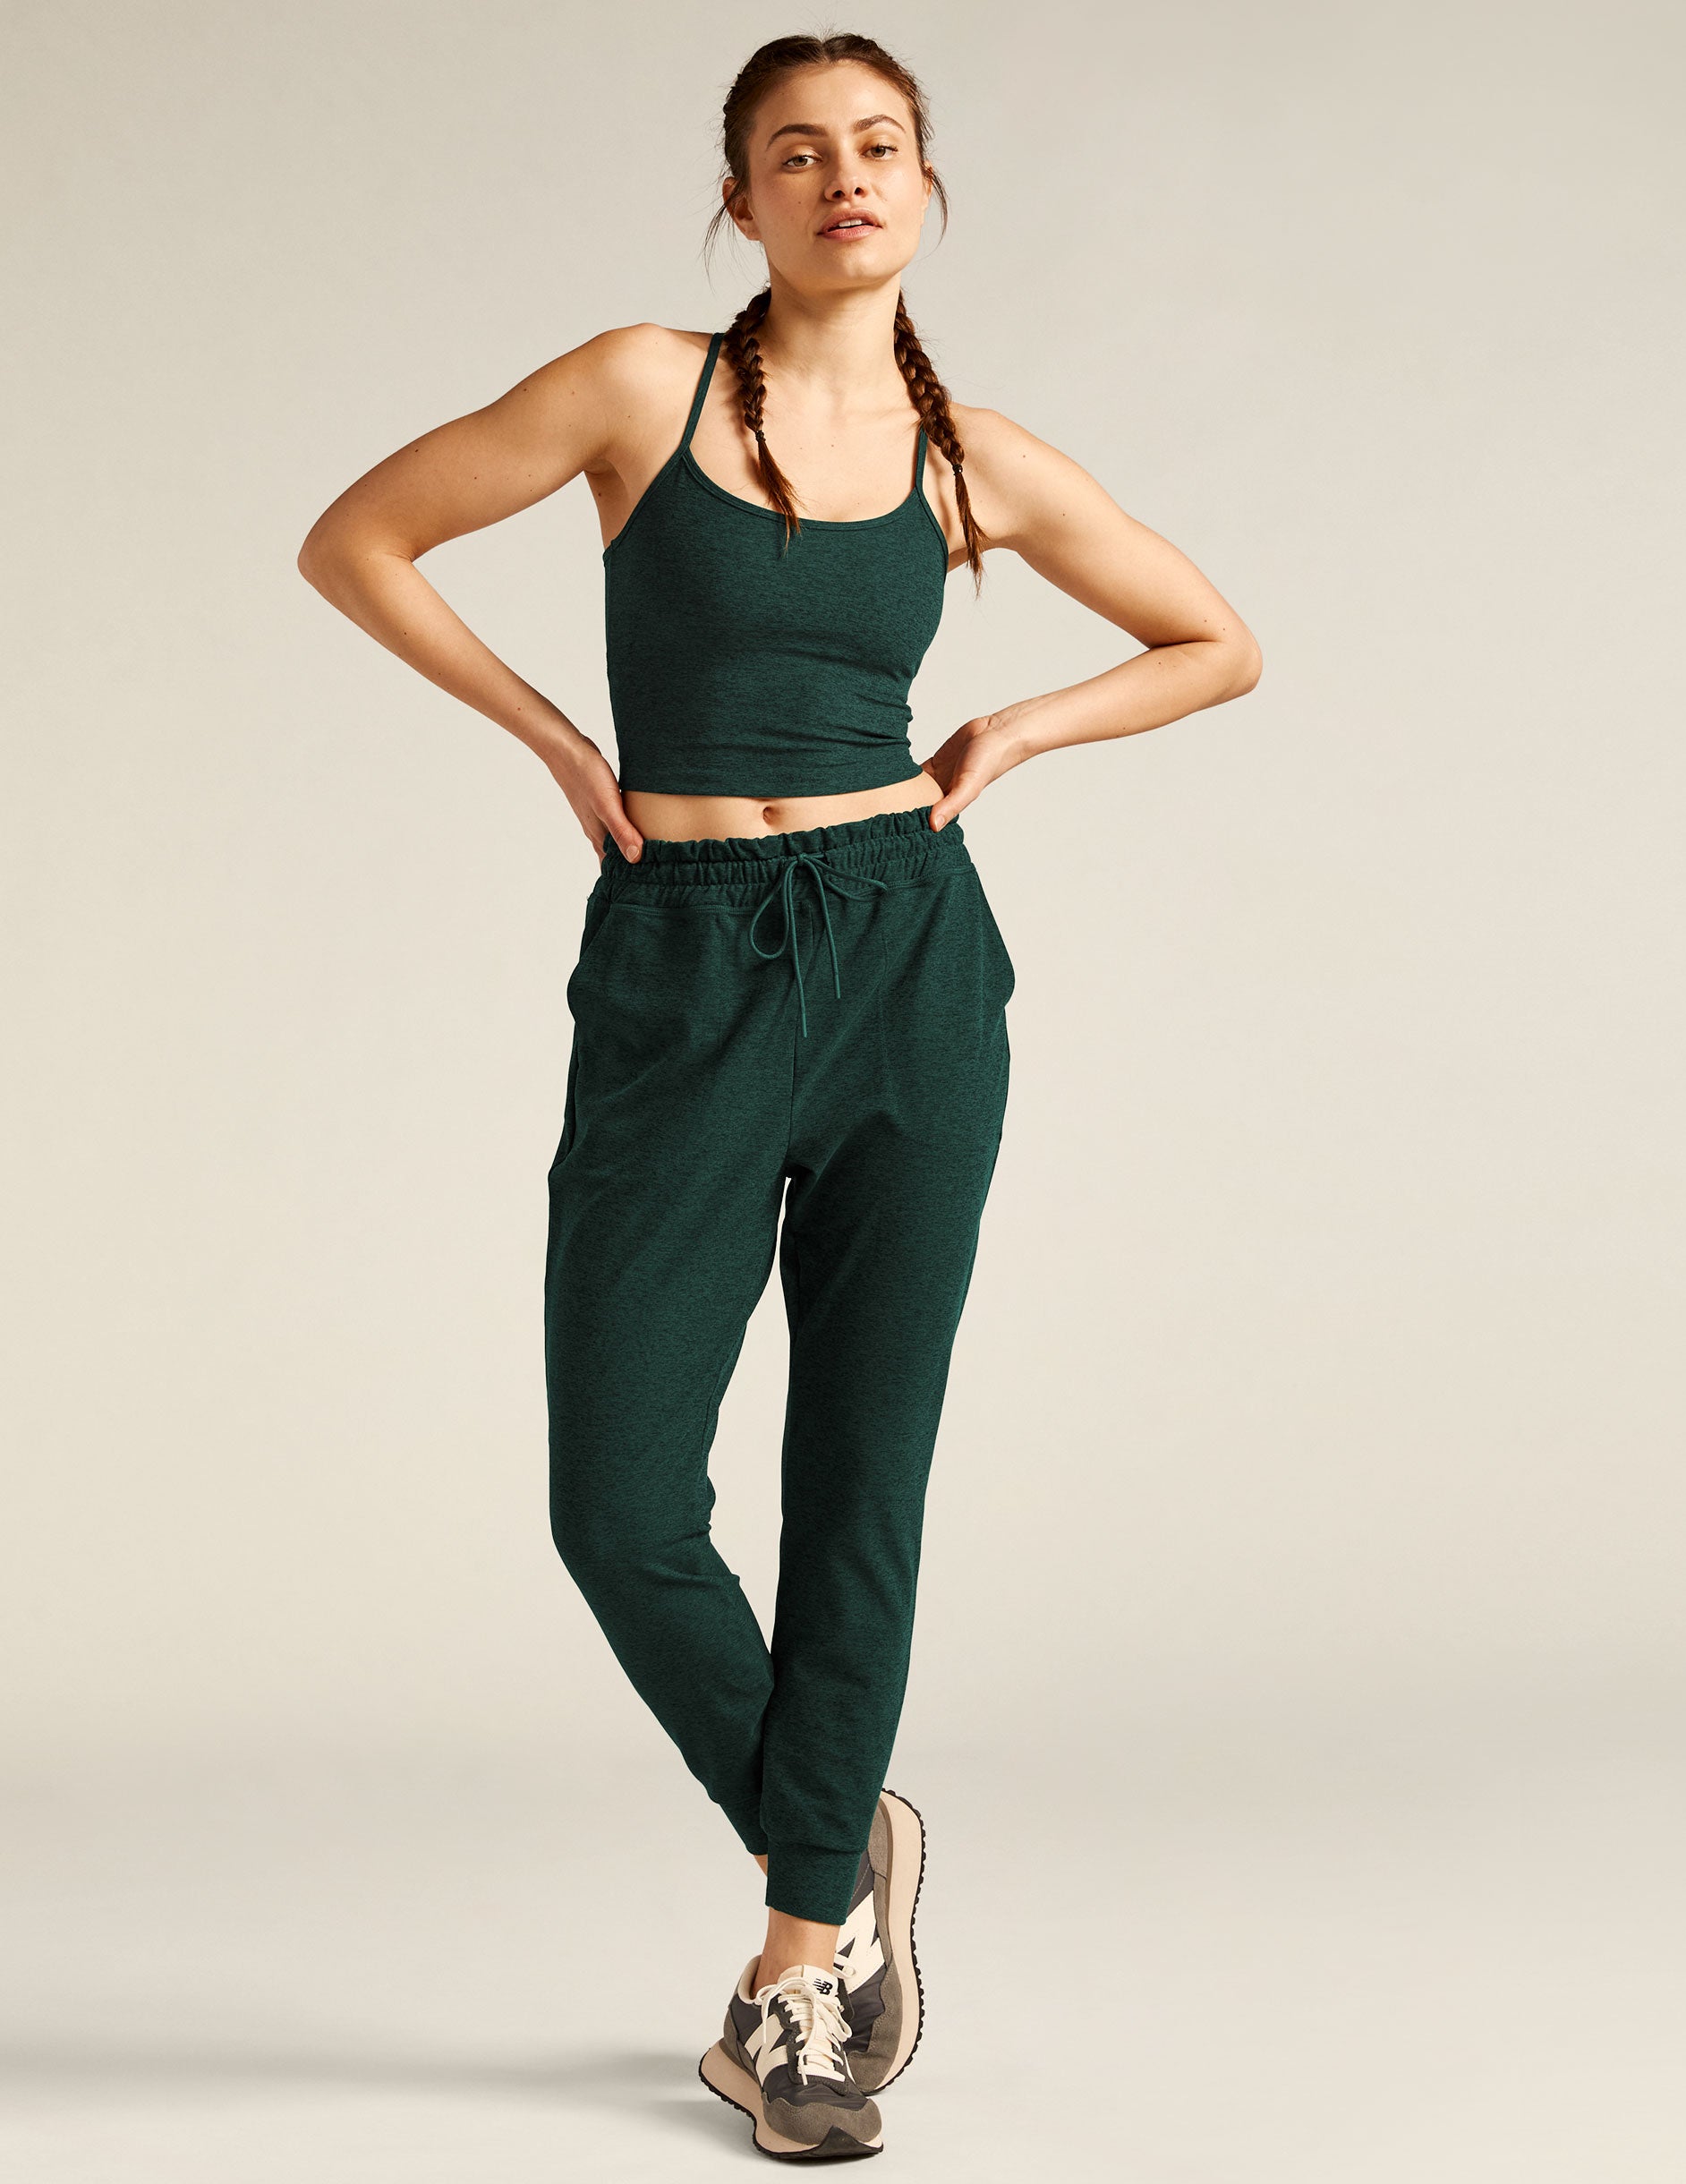 green midi pocket joggers with an elastic waistband and drawstring.